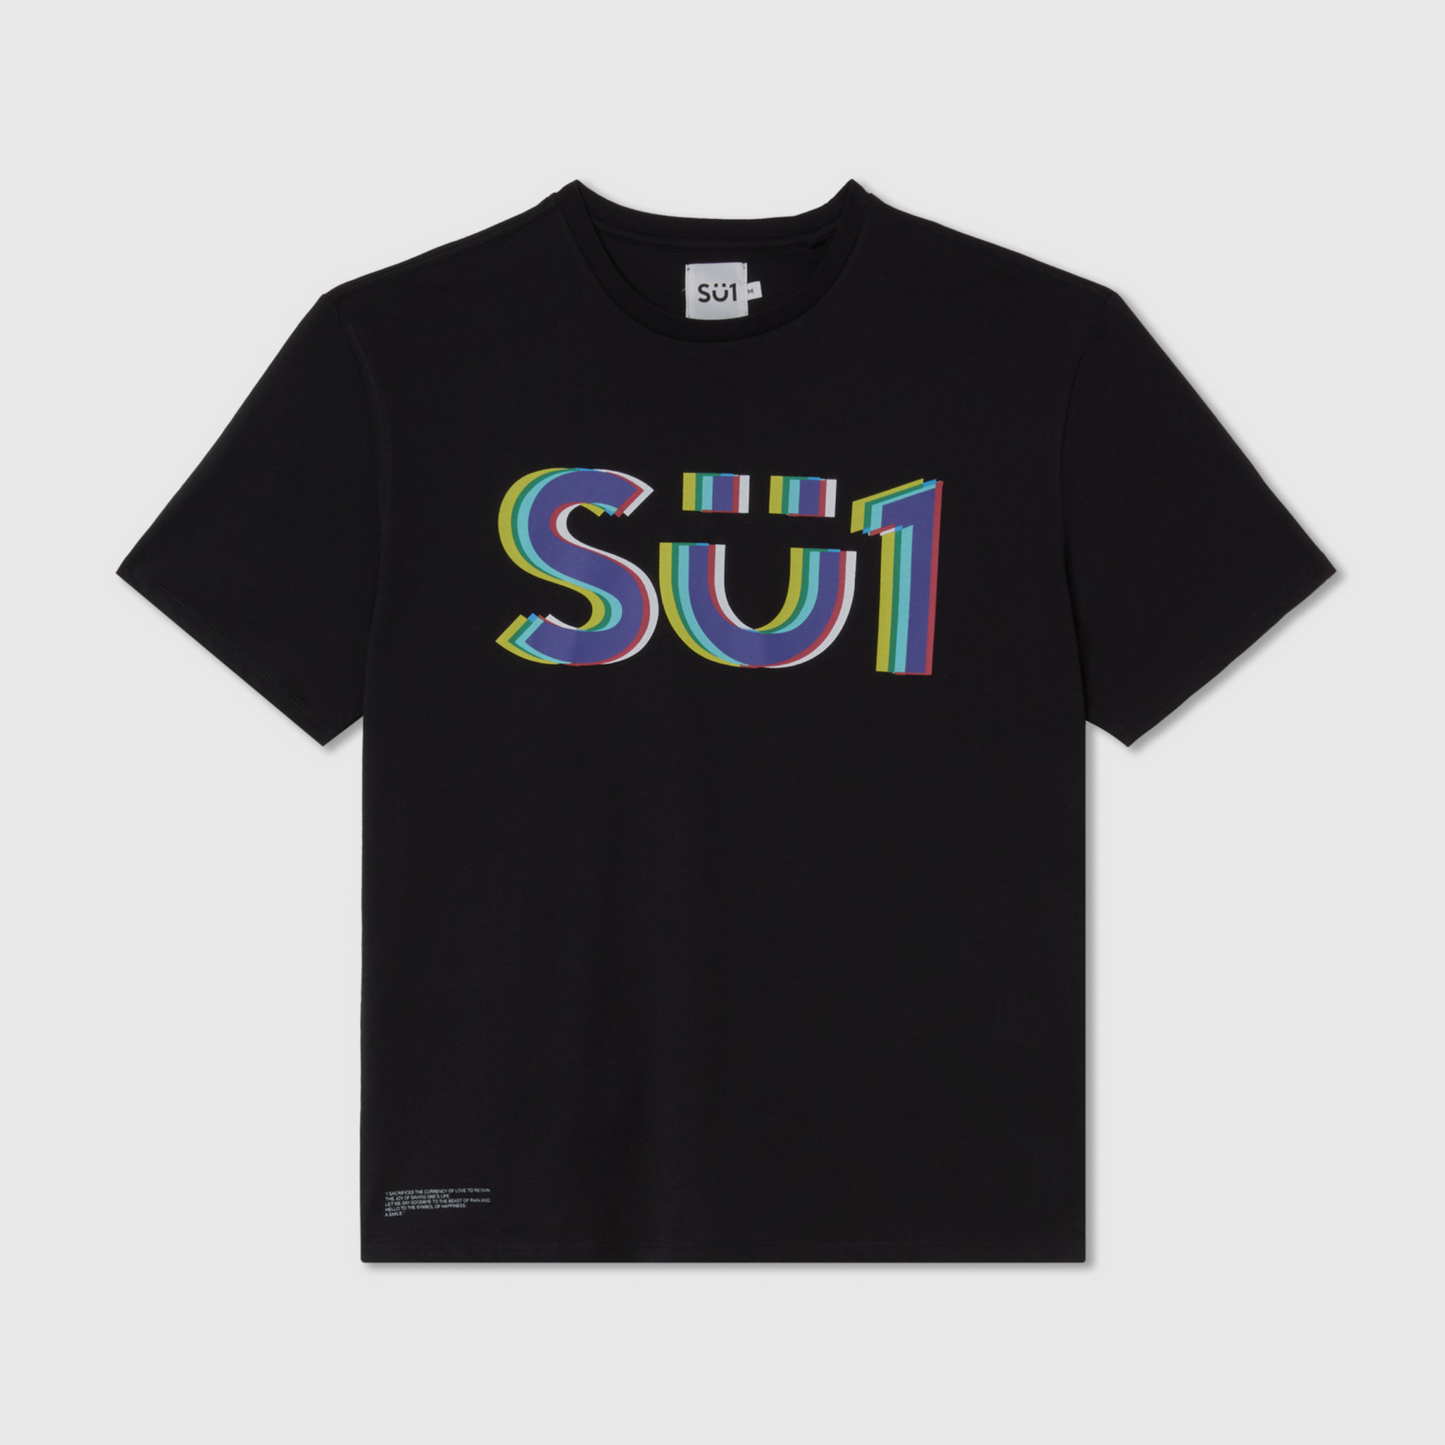 Black Oversized Loose Fit T-shirt Big Neon Logo Su1 Front